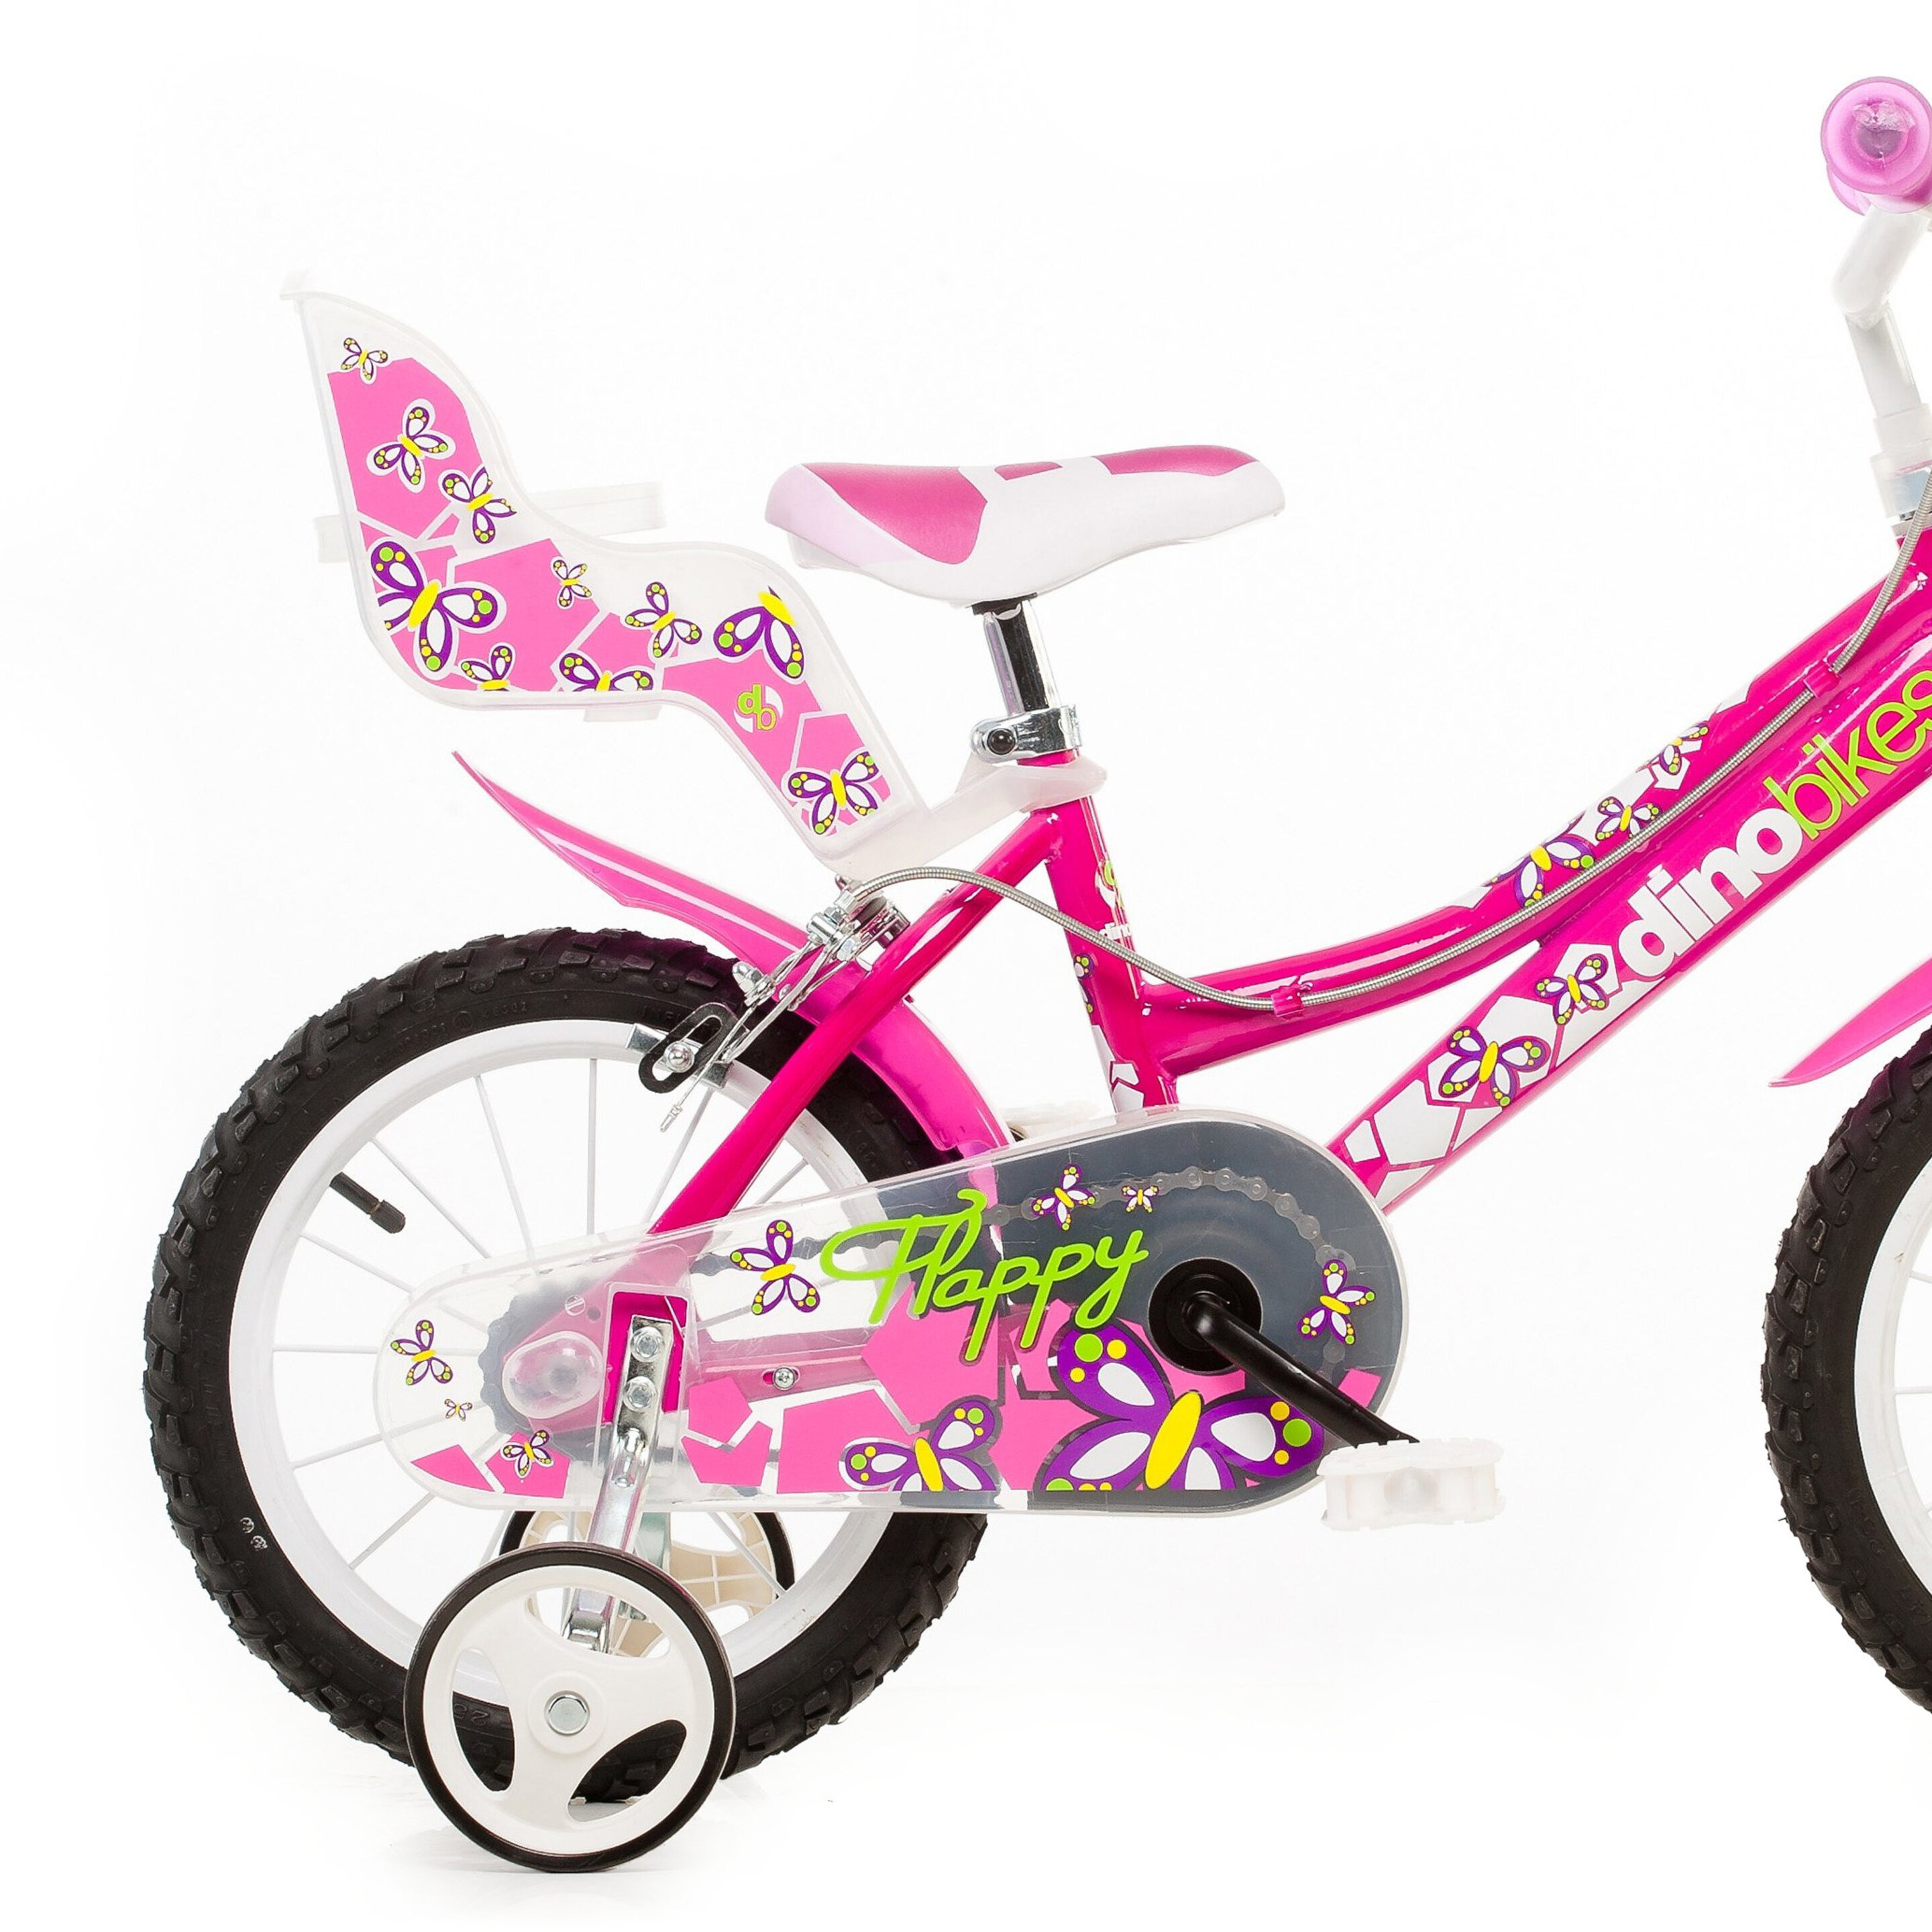 Bicicleta Infantil Happy 14 Pulgadas